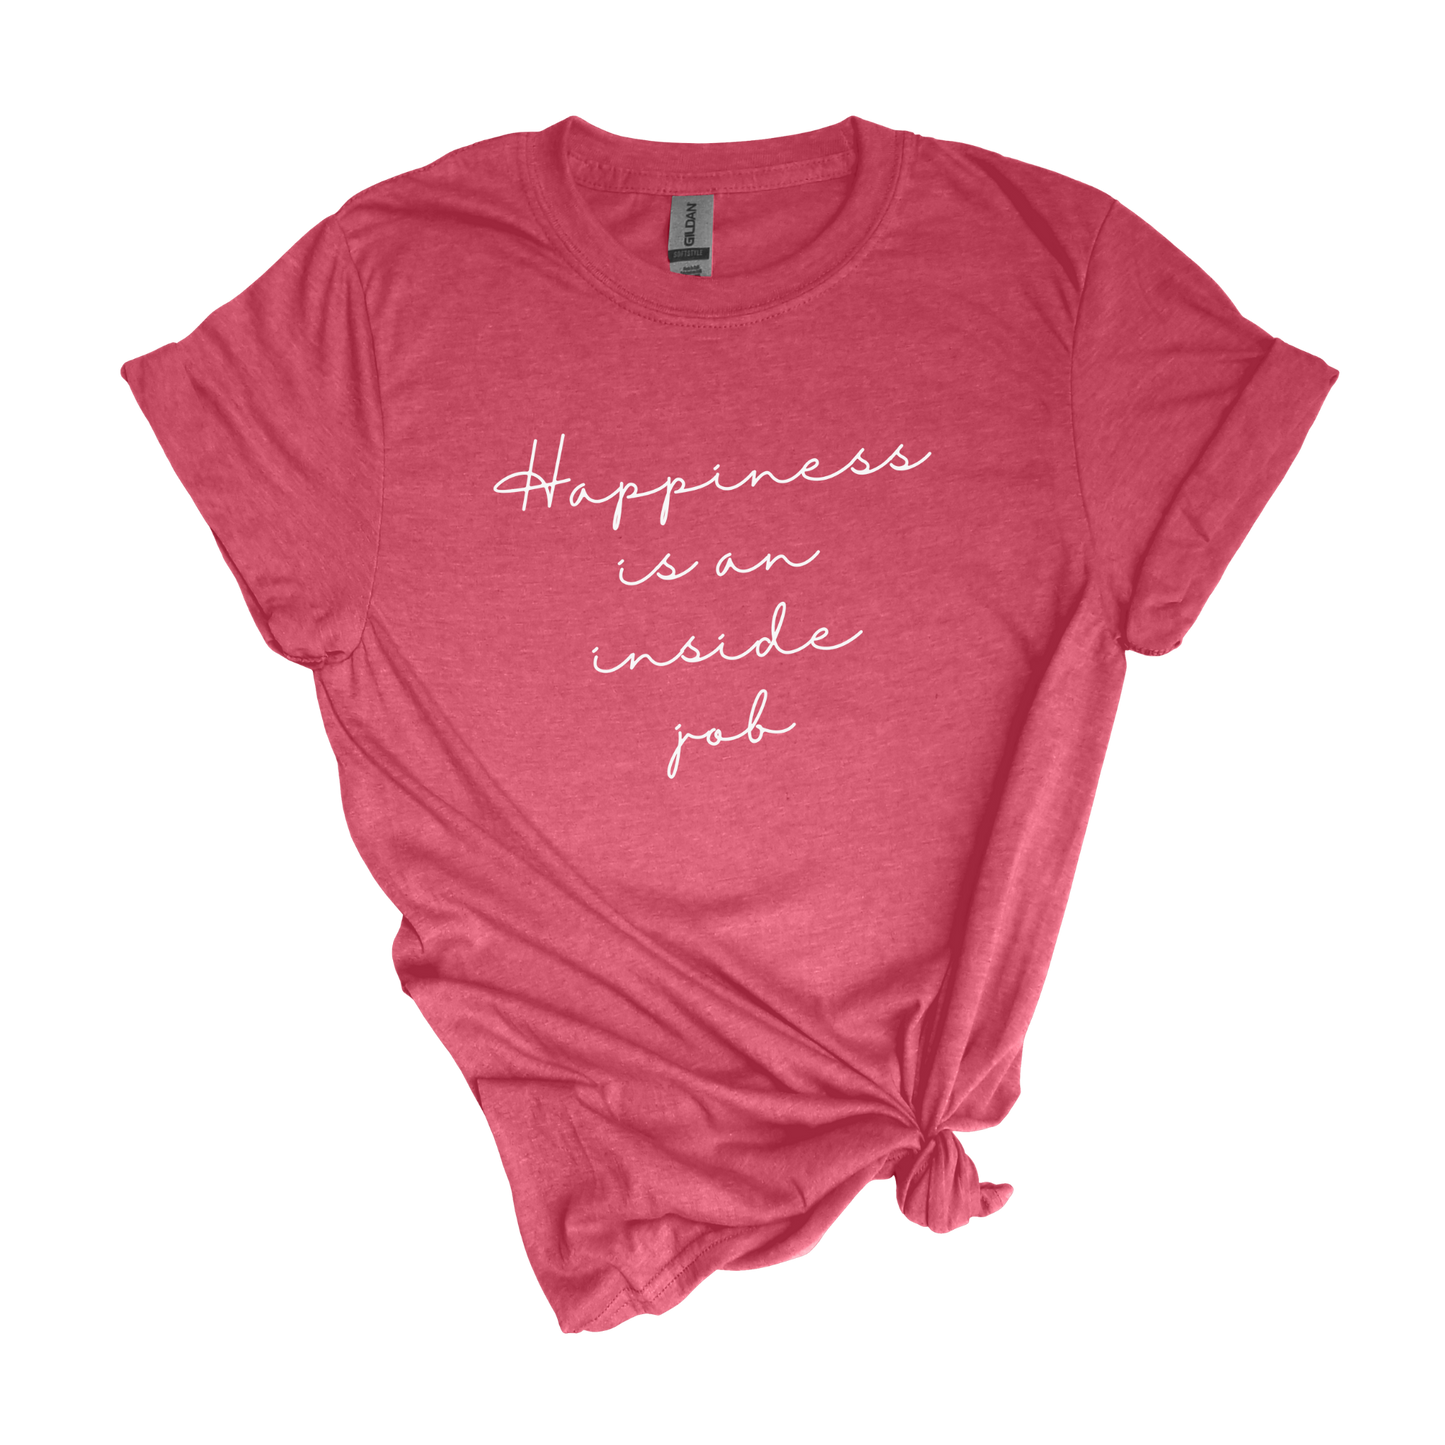 Happiness is an inside job - Adult Unisex Soft Inspirational T-shirt